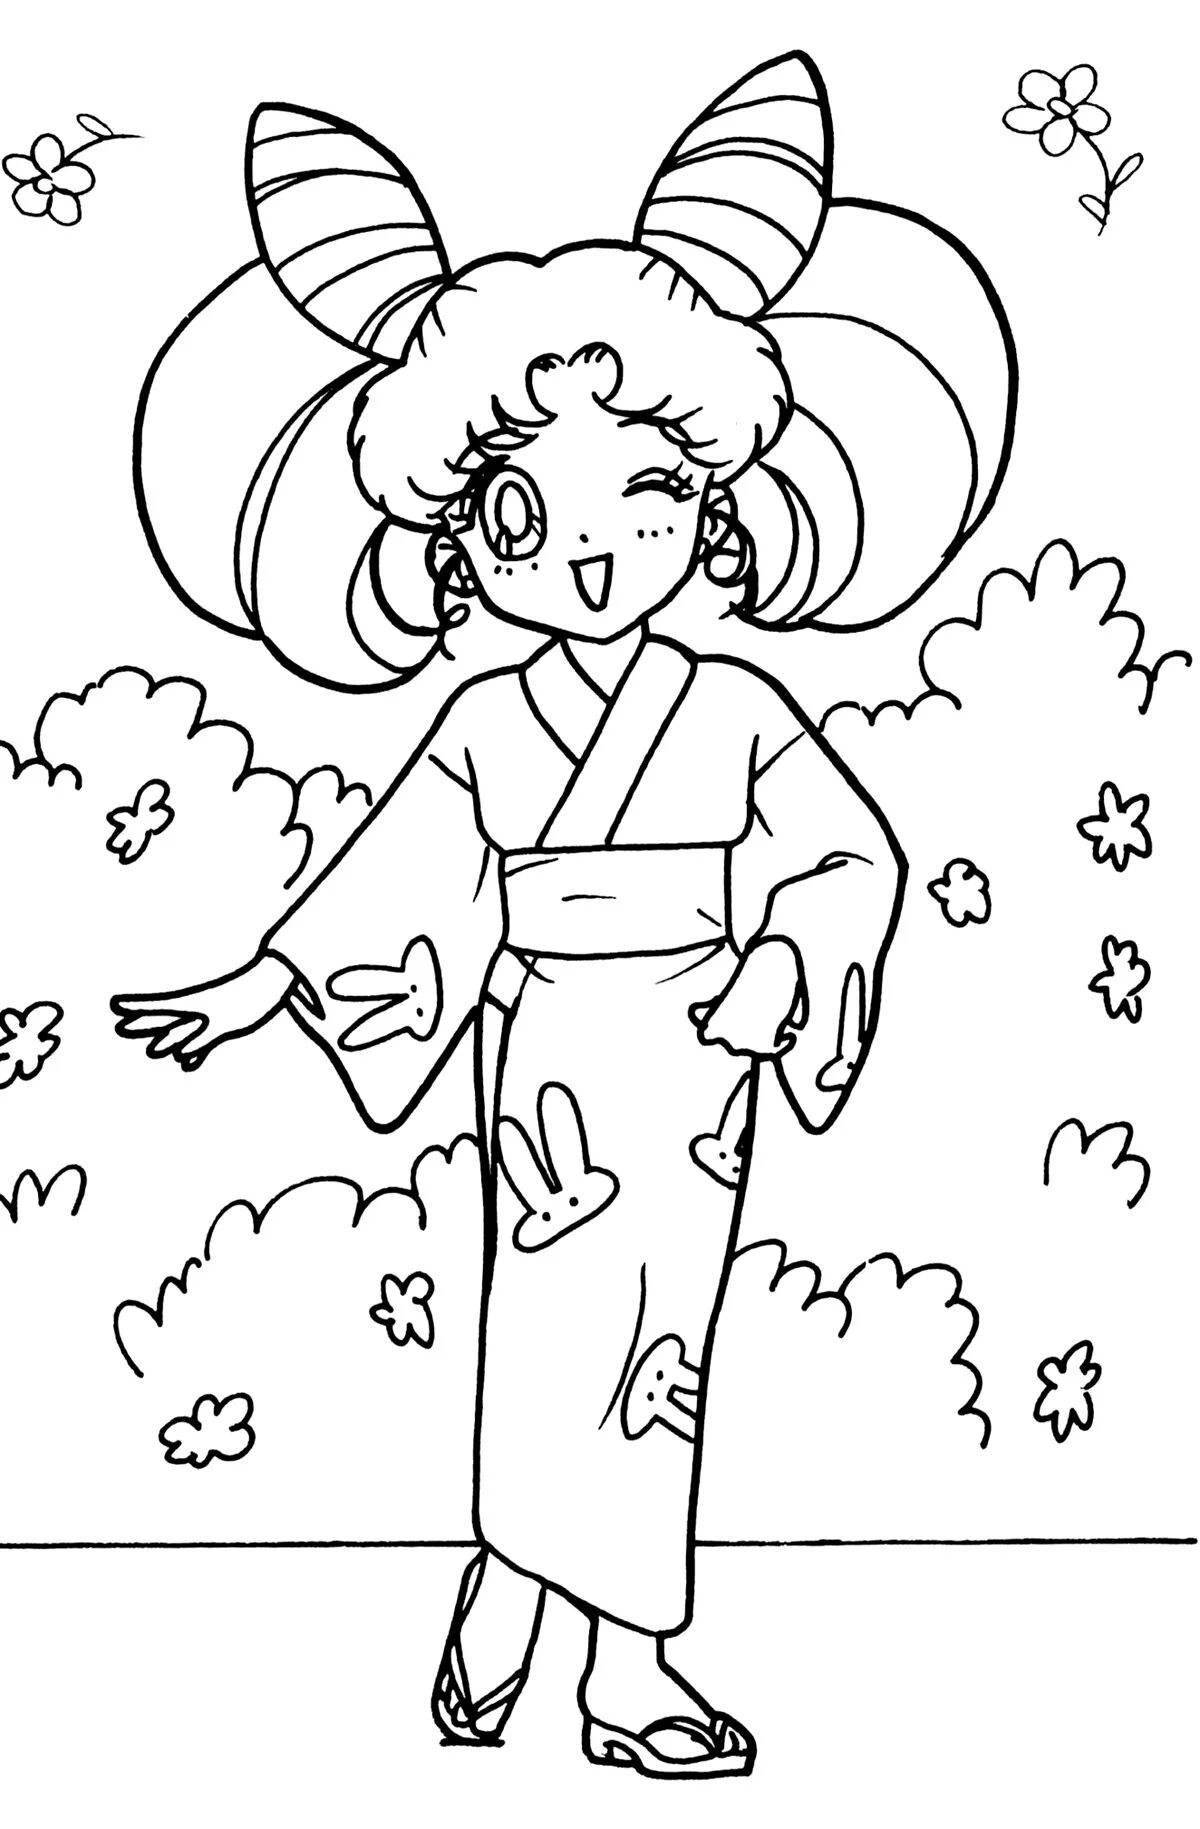 Cute kimono coloring page